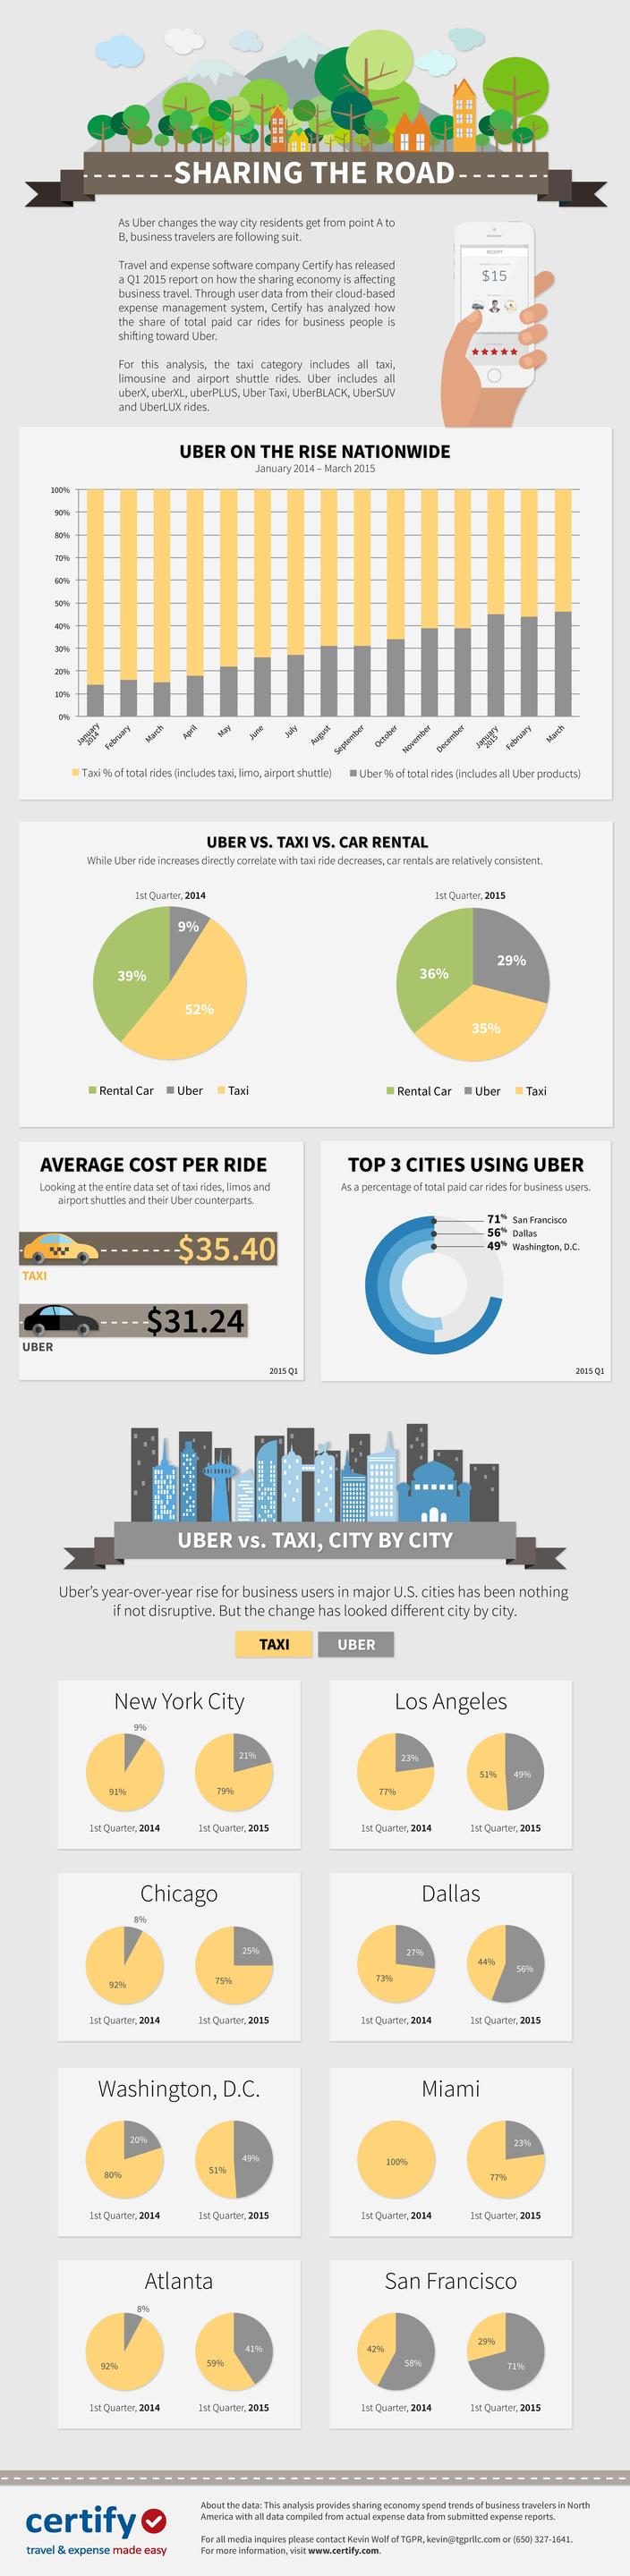 Uber vs Taxi Car rental